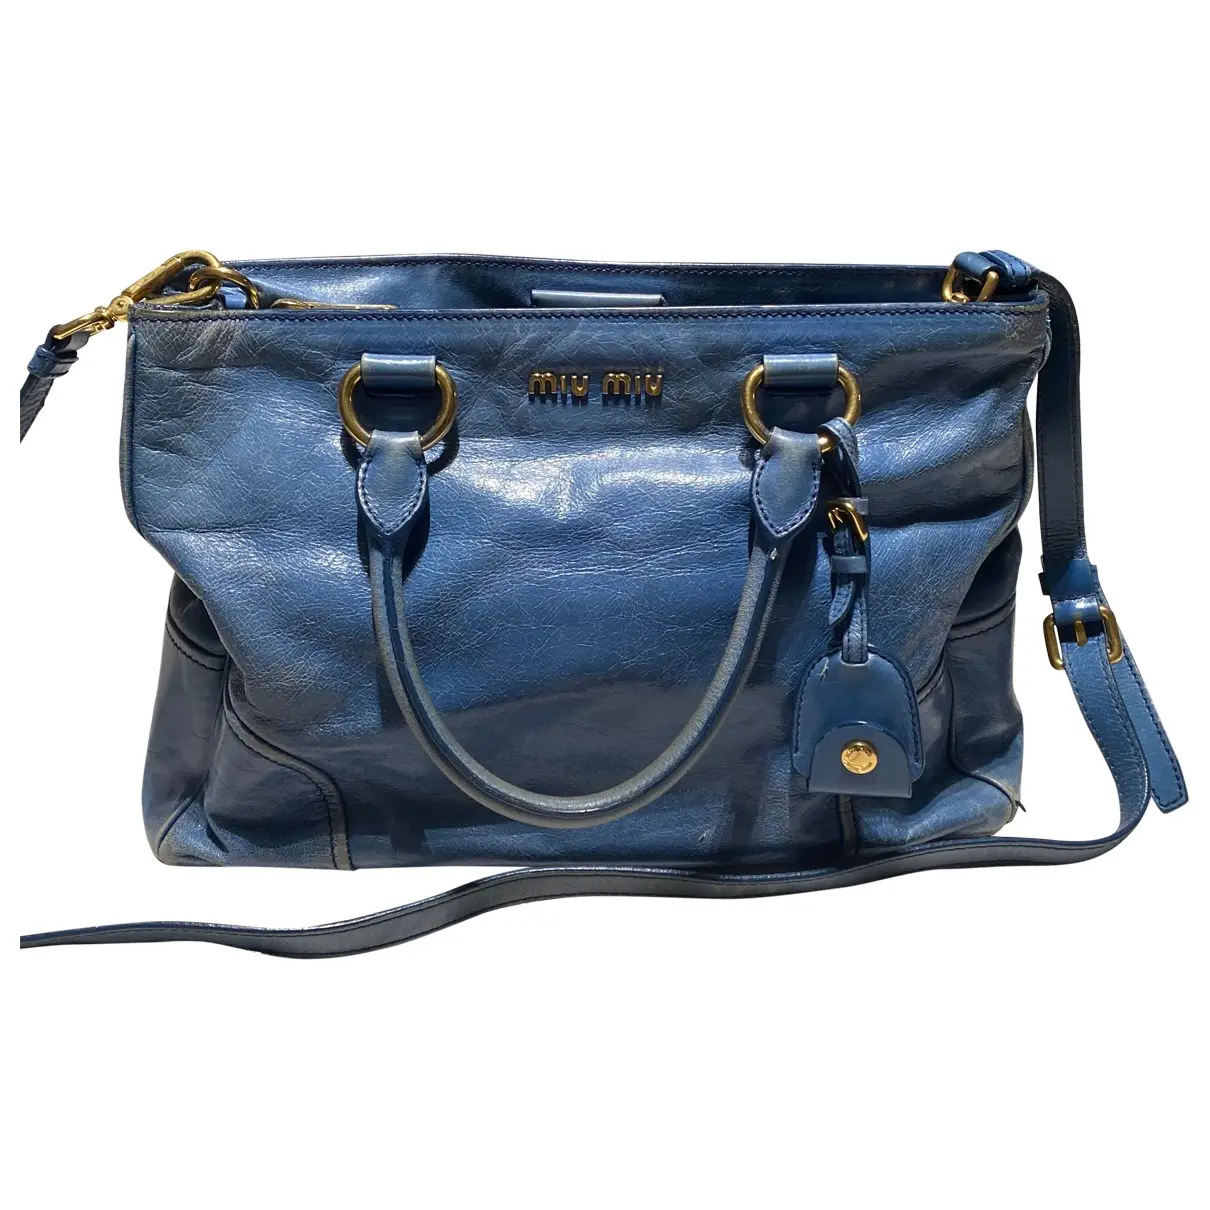 Leather handbag Miu Miu